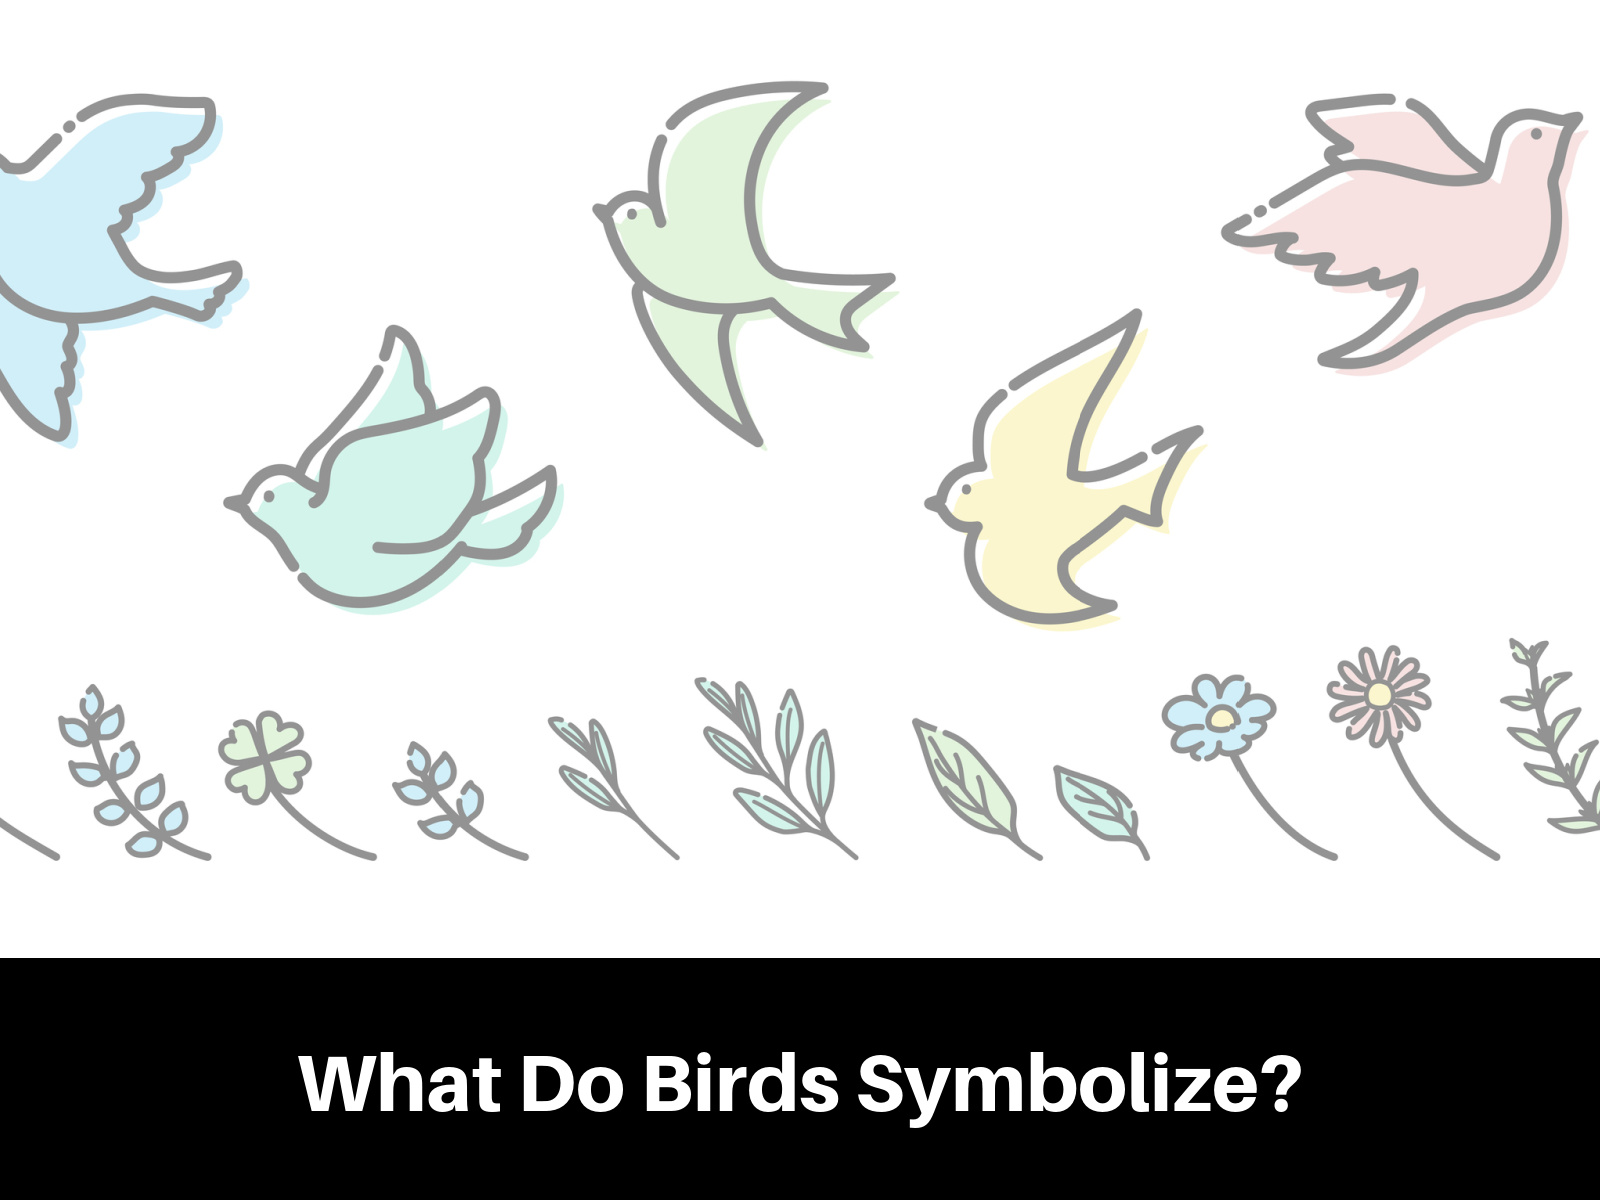 10 Bird Symbolism Meanings: What Do Birds Symbolize?